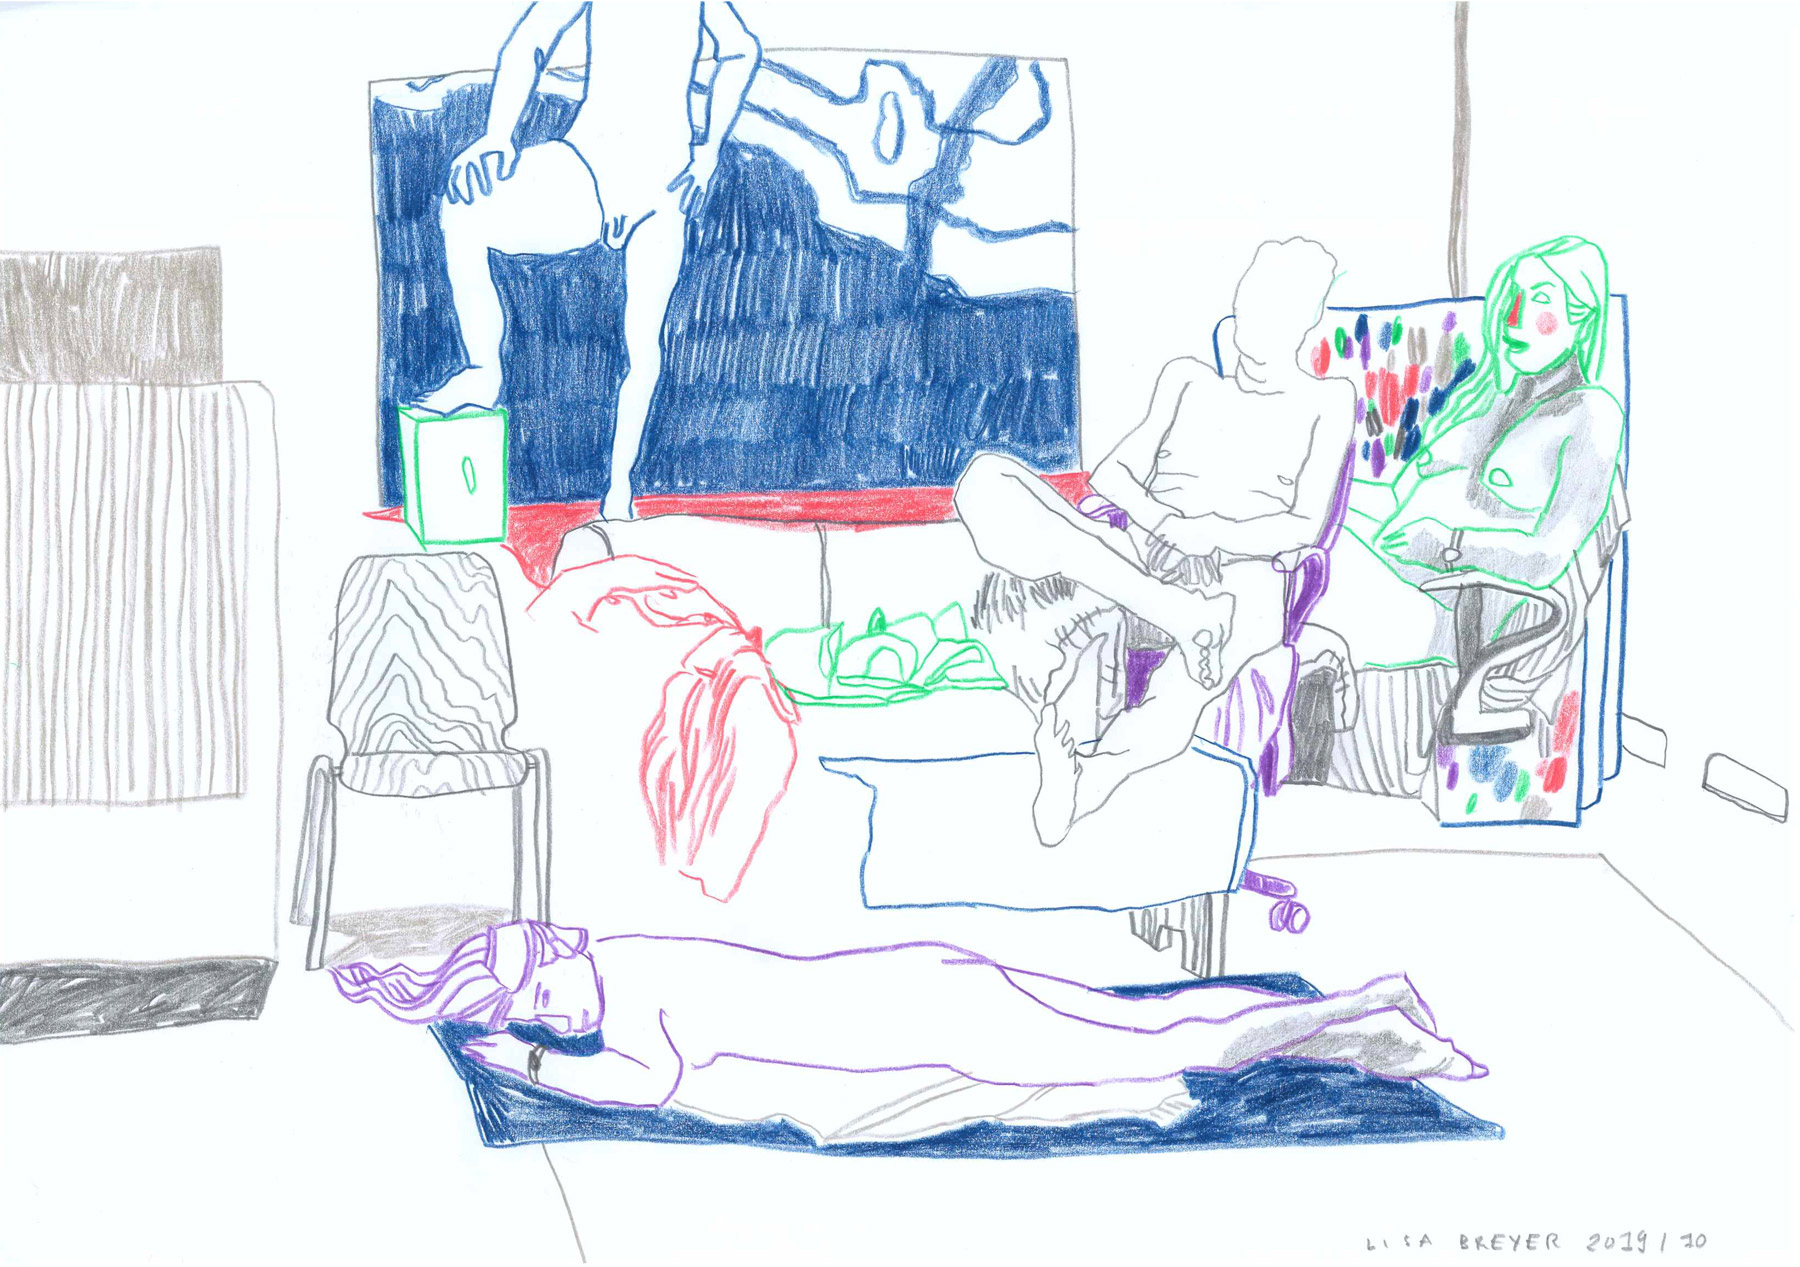 Formation mit Spiegel, colored pencil on paper, 42x29, 2019, Lisa Breyer